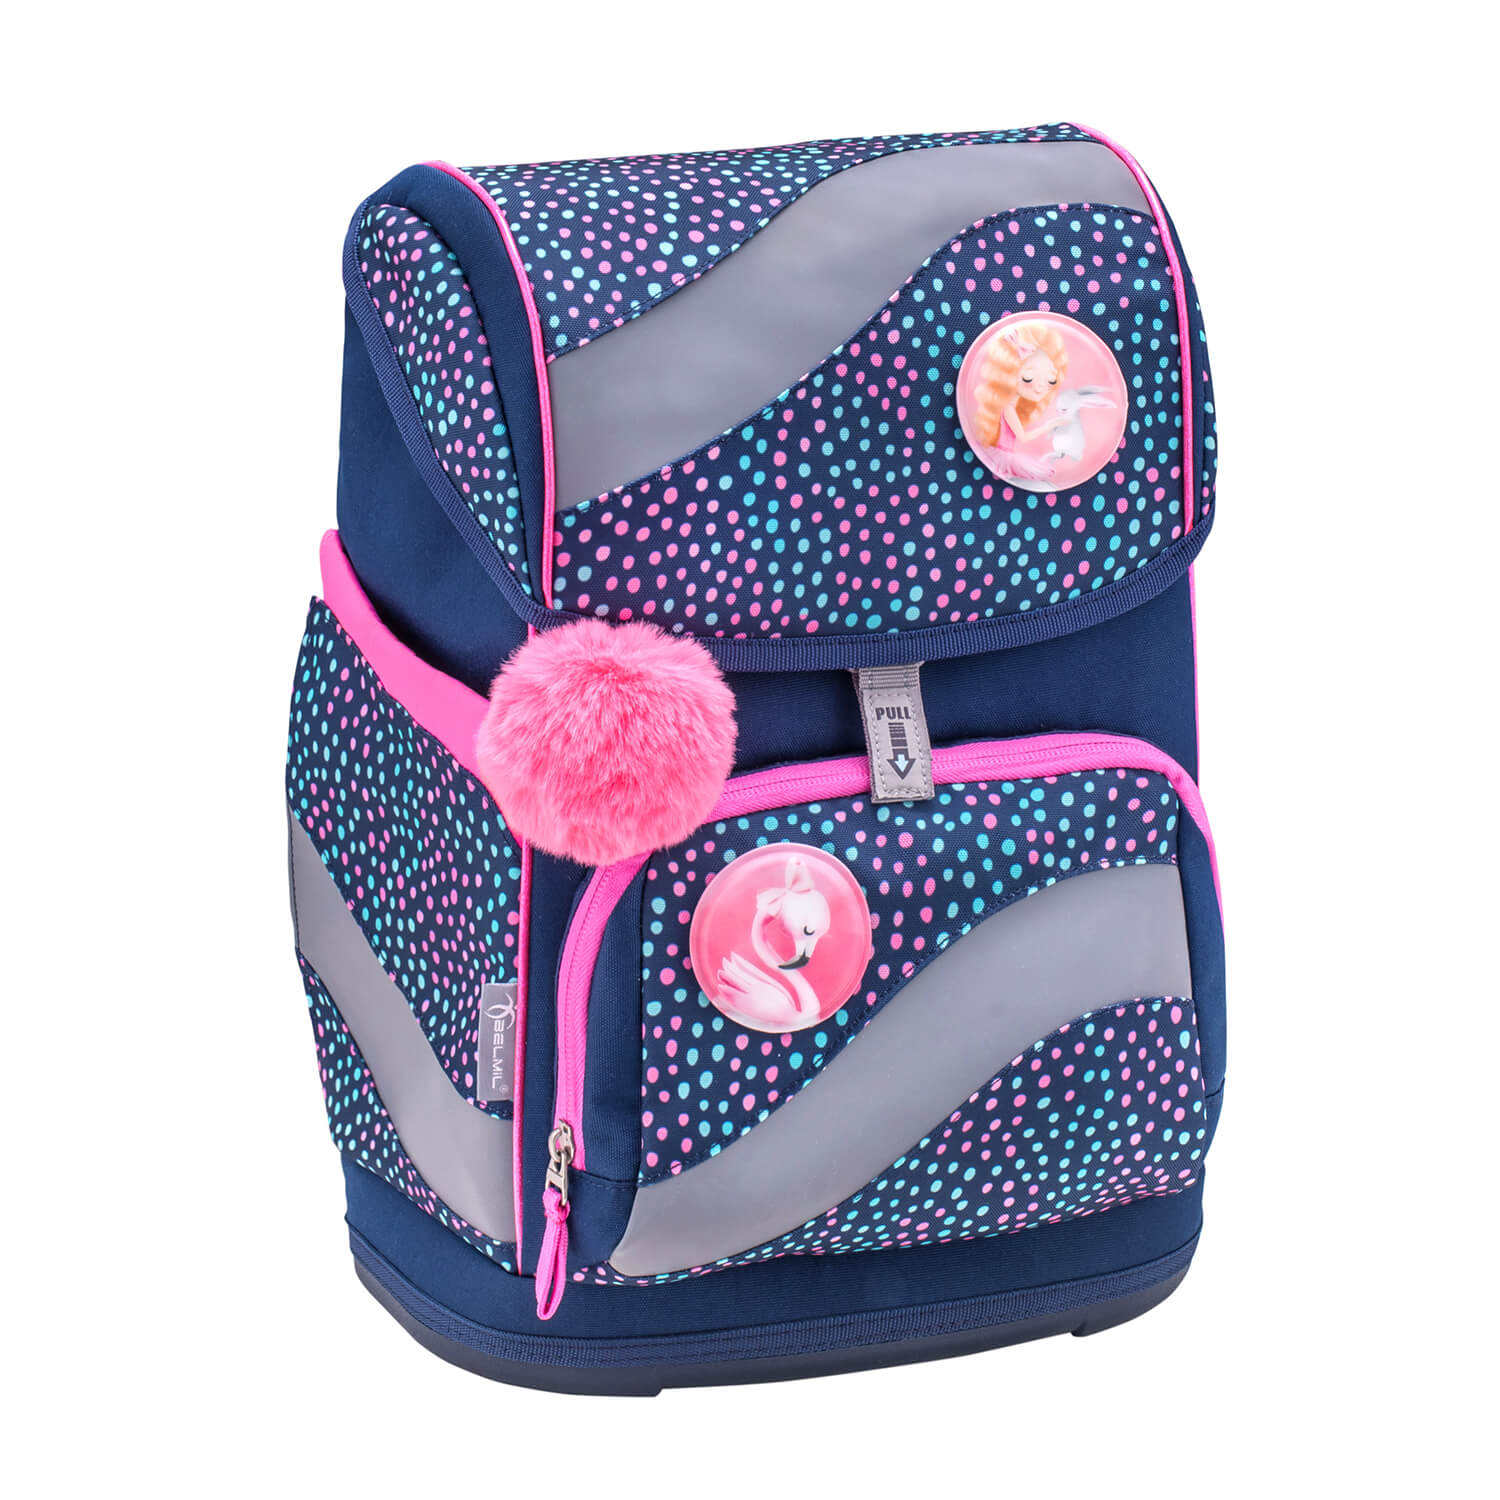 Smarty Amazing Polka Dot 2 schoolbag set 6 pcs